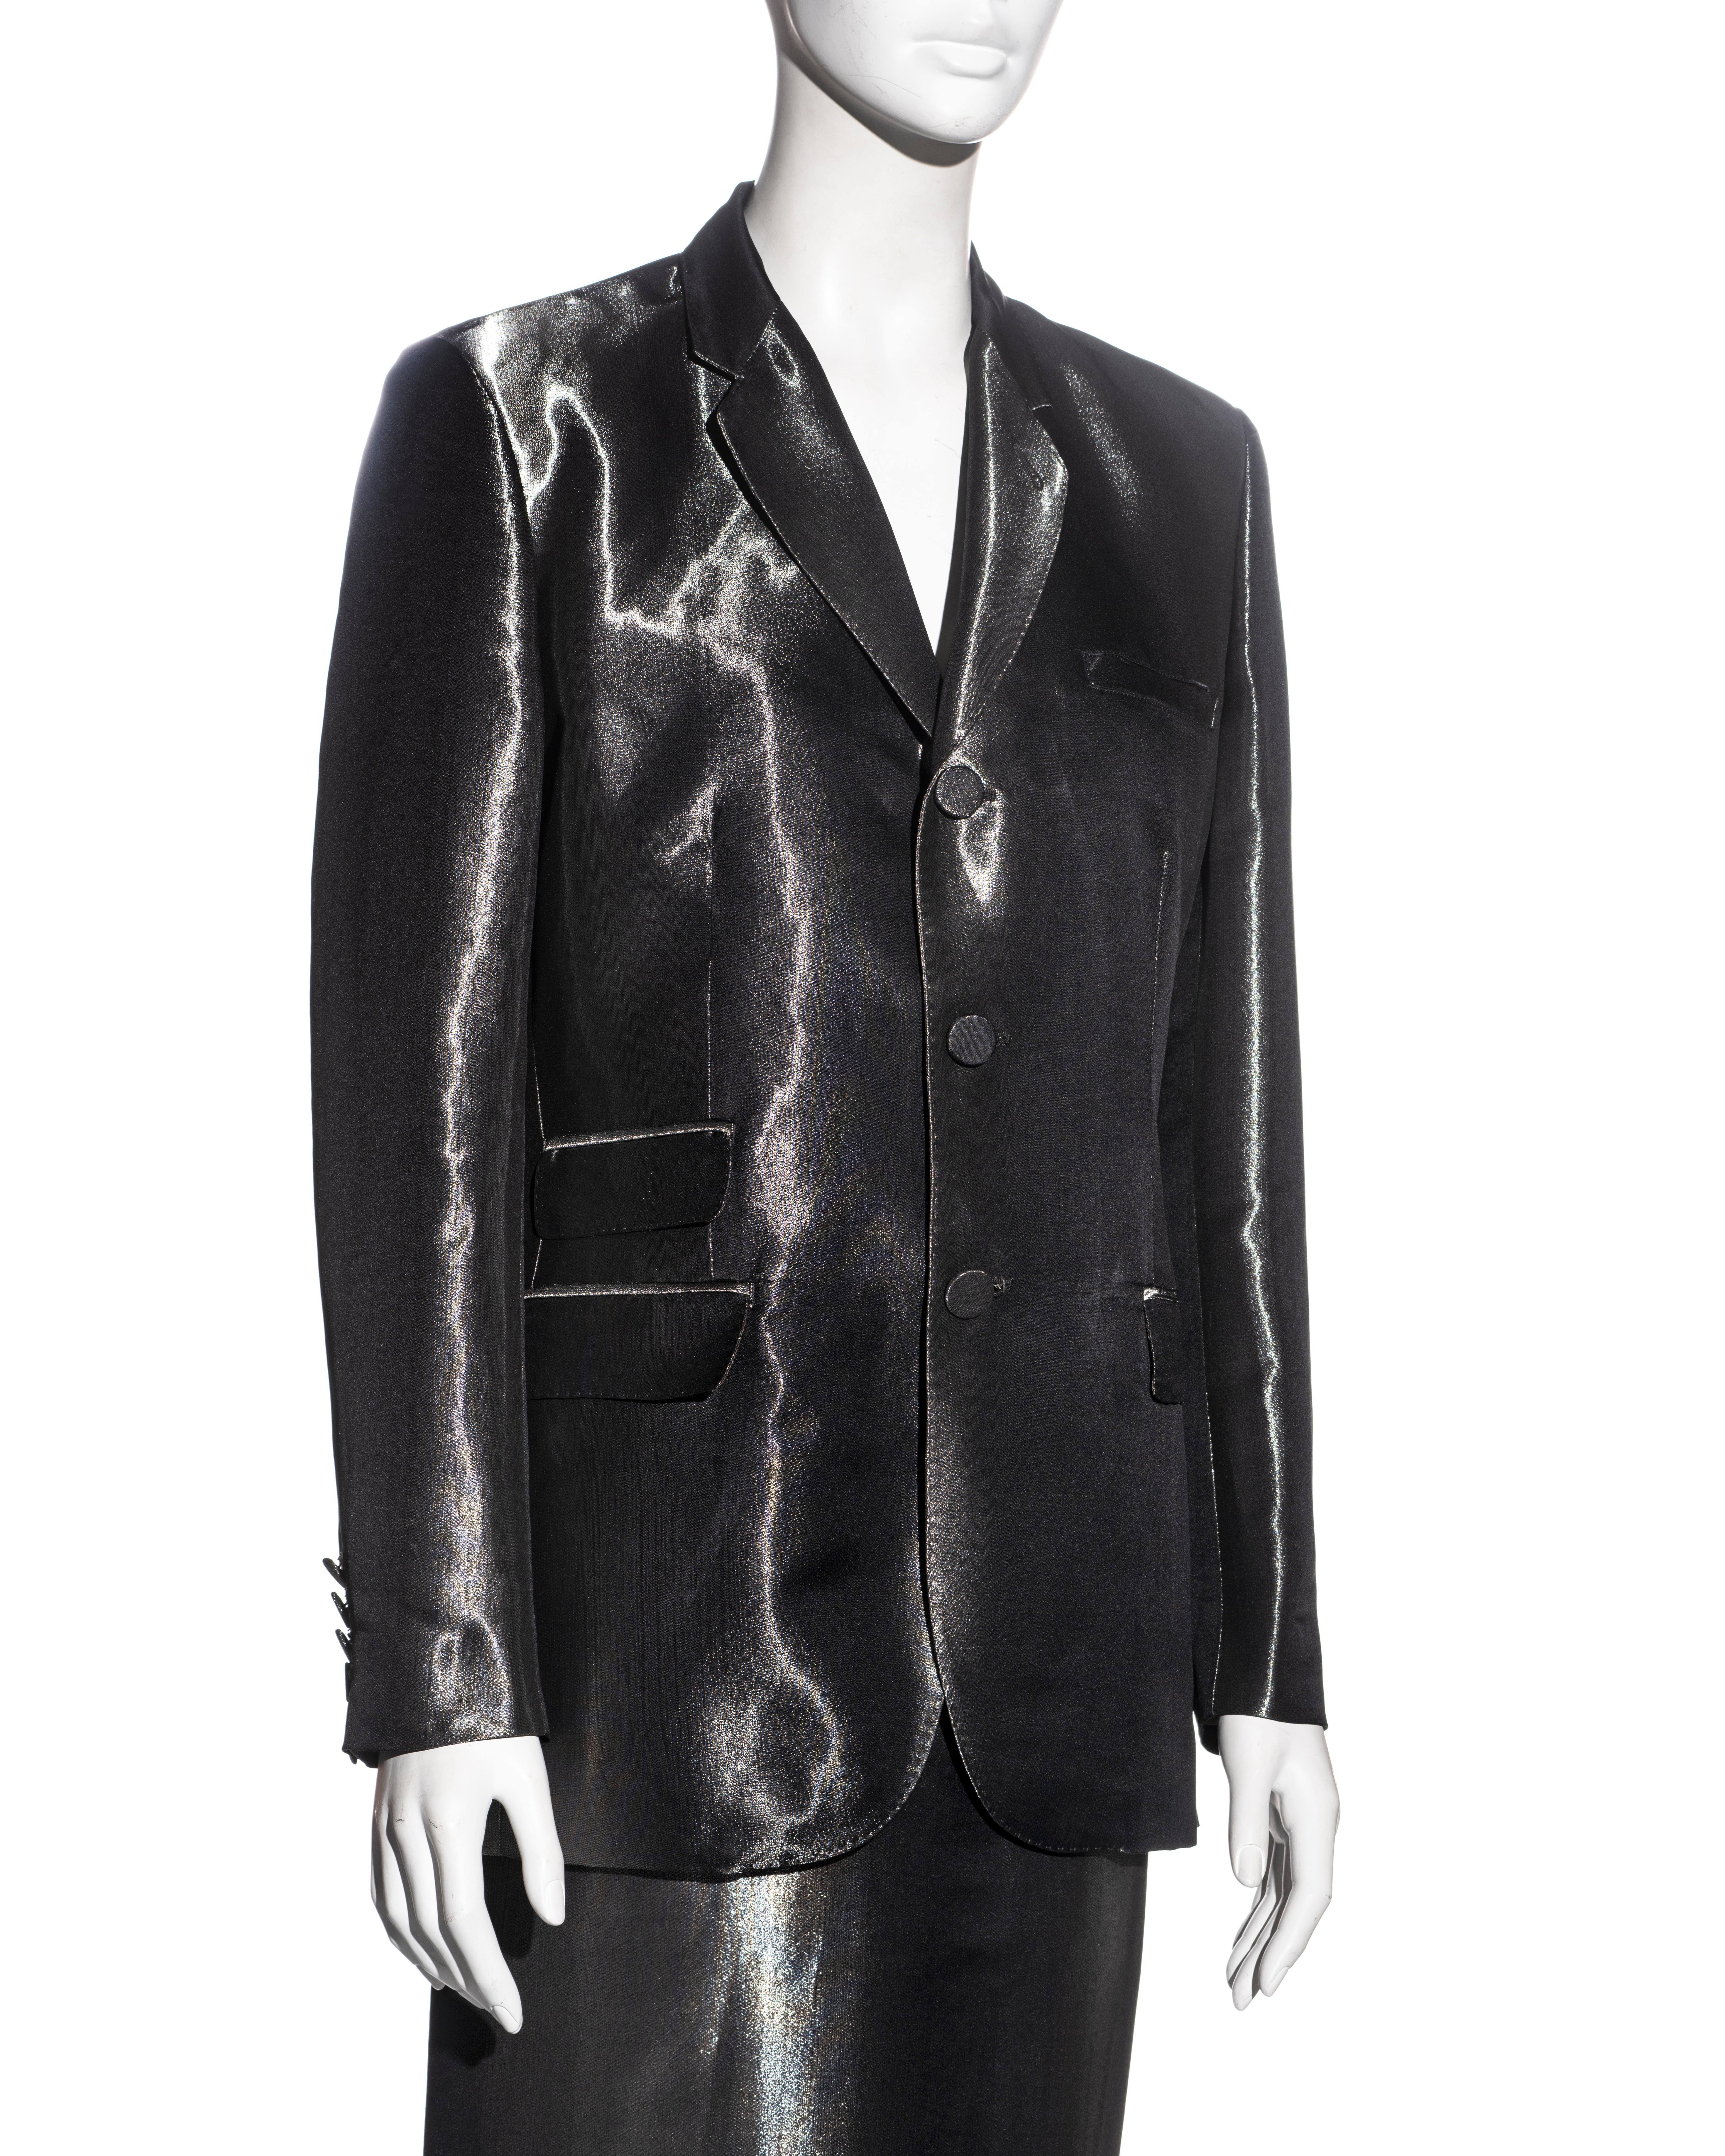 Black Jean Paul Gaultier metallic gunmetal silk skirt suit, fw 1997